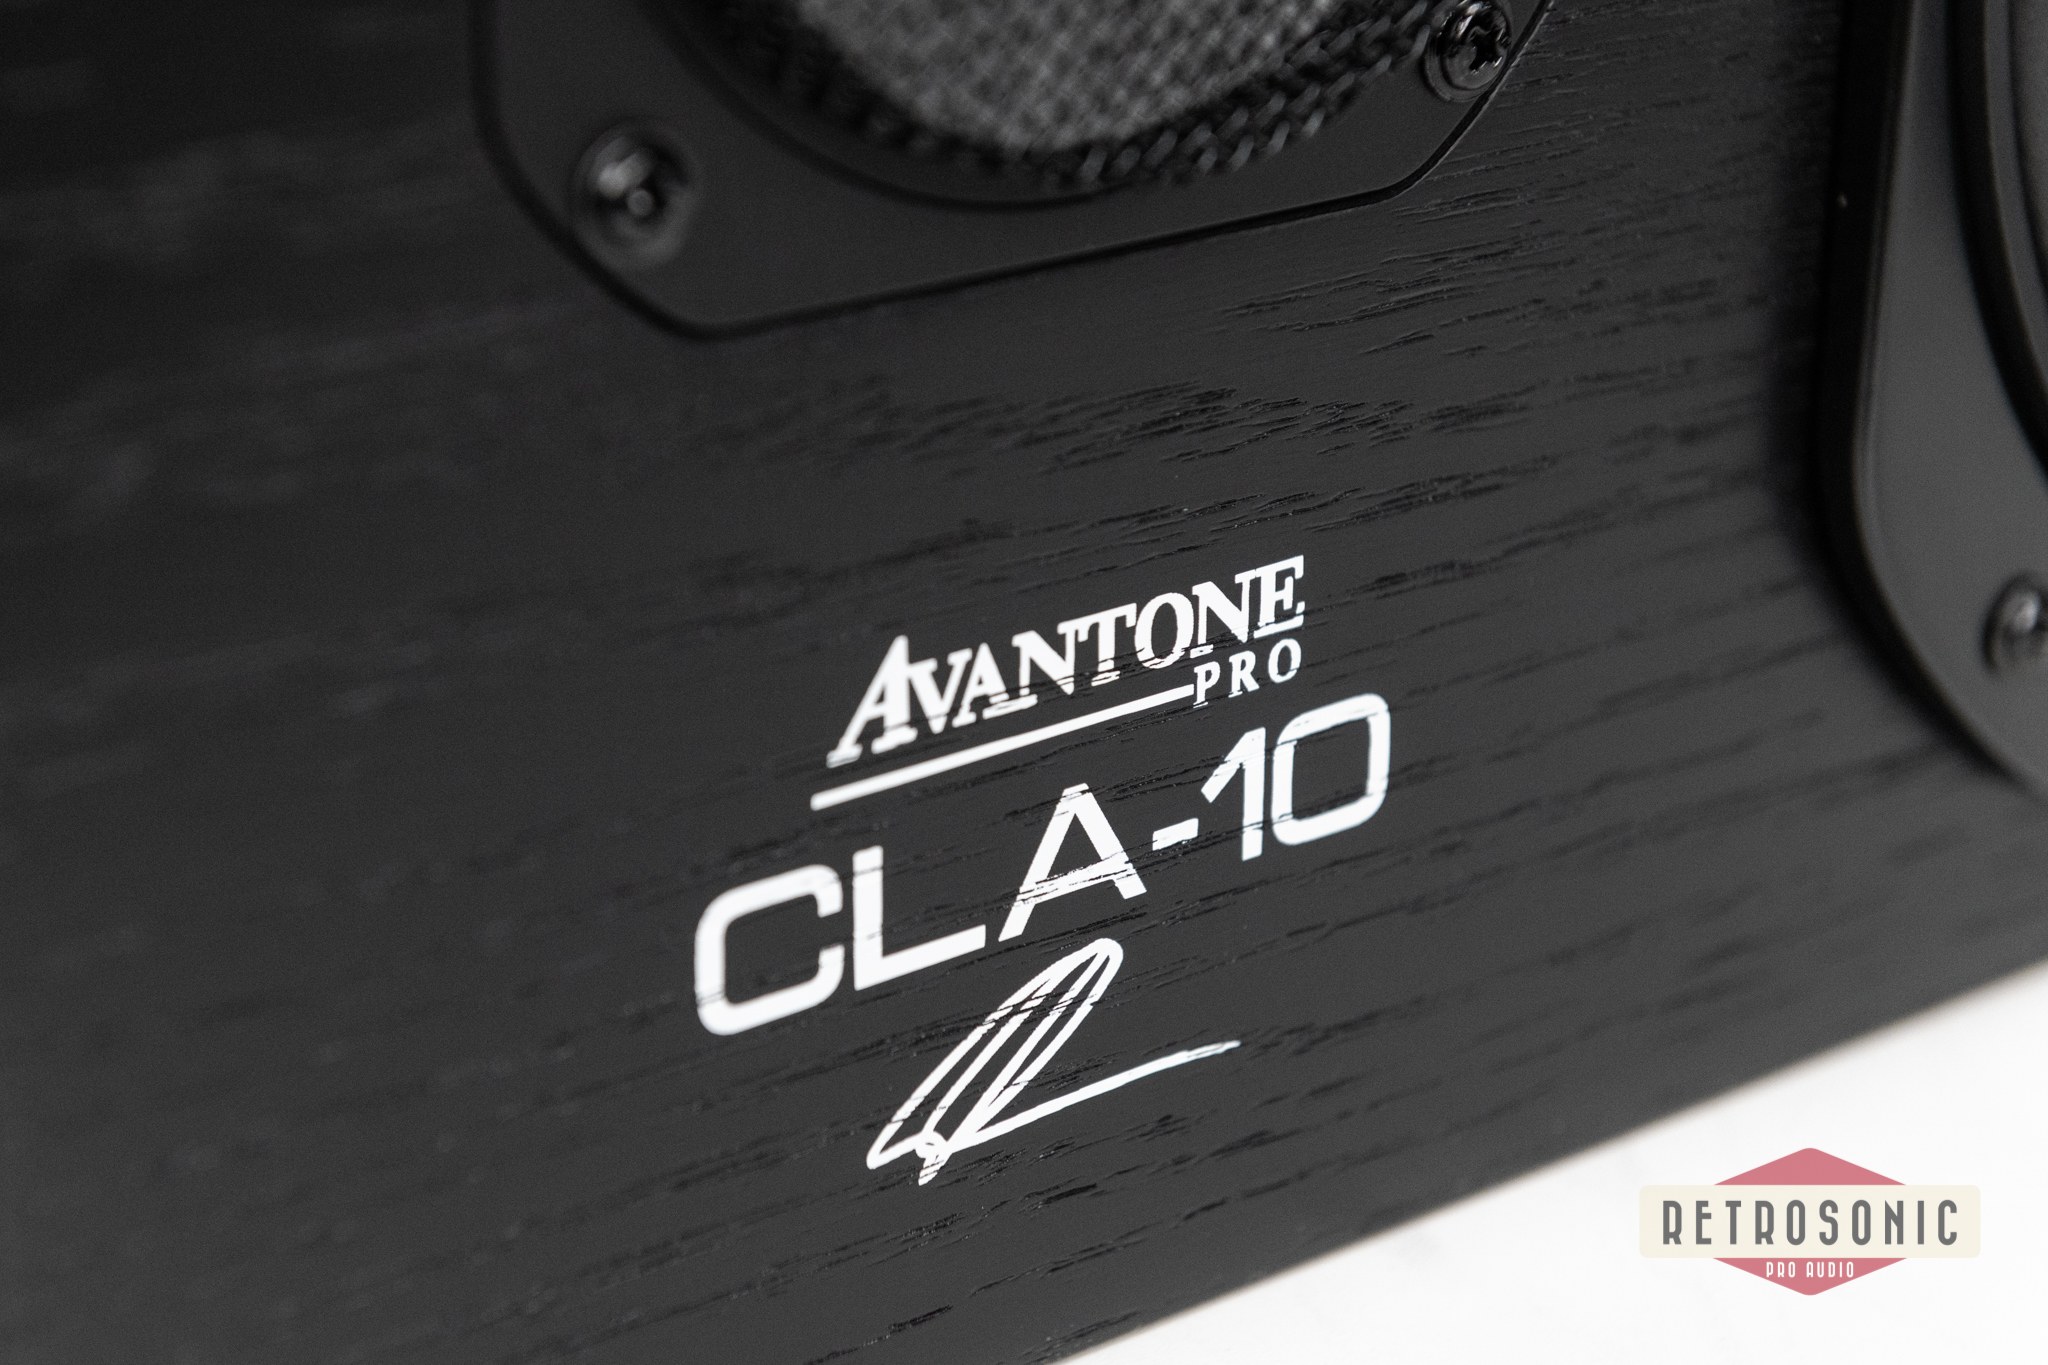 Avantone Pro CLA-10 pair